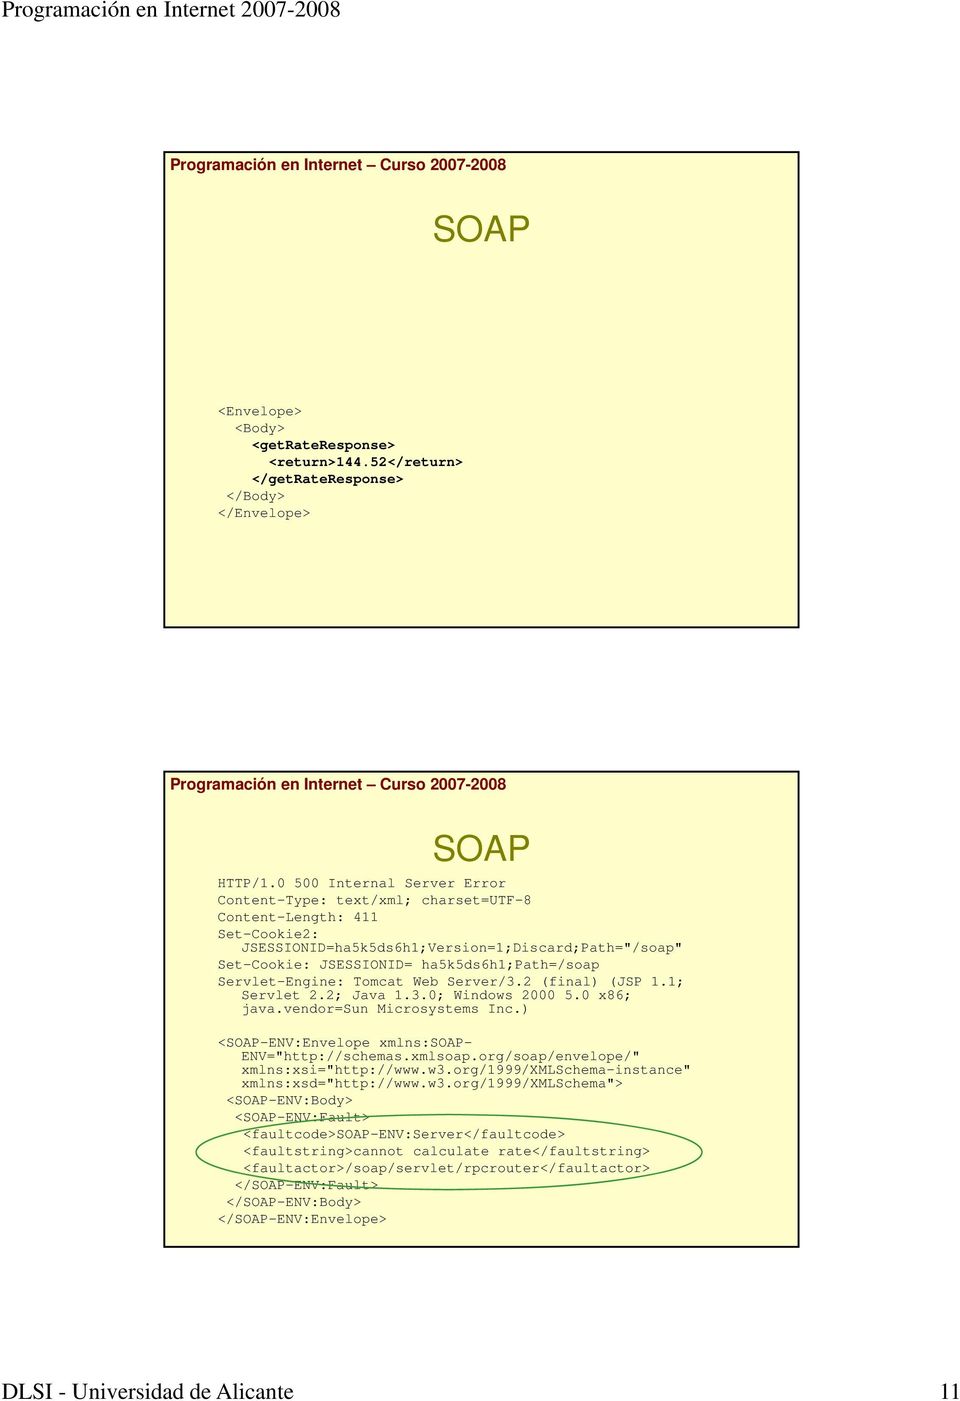 Servlet-Engine: Tomcat Web Server/3.2 (final) (JSP 1.1; Servlet 2.2; Java 1.3.0; Windows 2000 5.0 x86; java.vendor=sun Microsystems Inc.) <SOAP-ENV:Envelope xmlns:soap- ENV="http://schemas.xmlsoap.